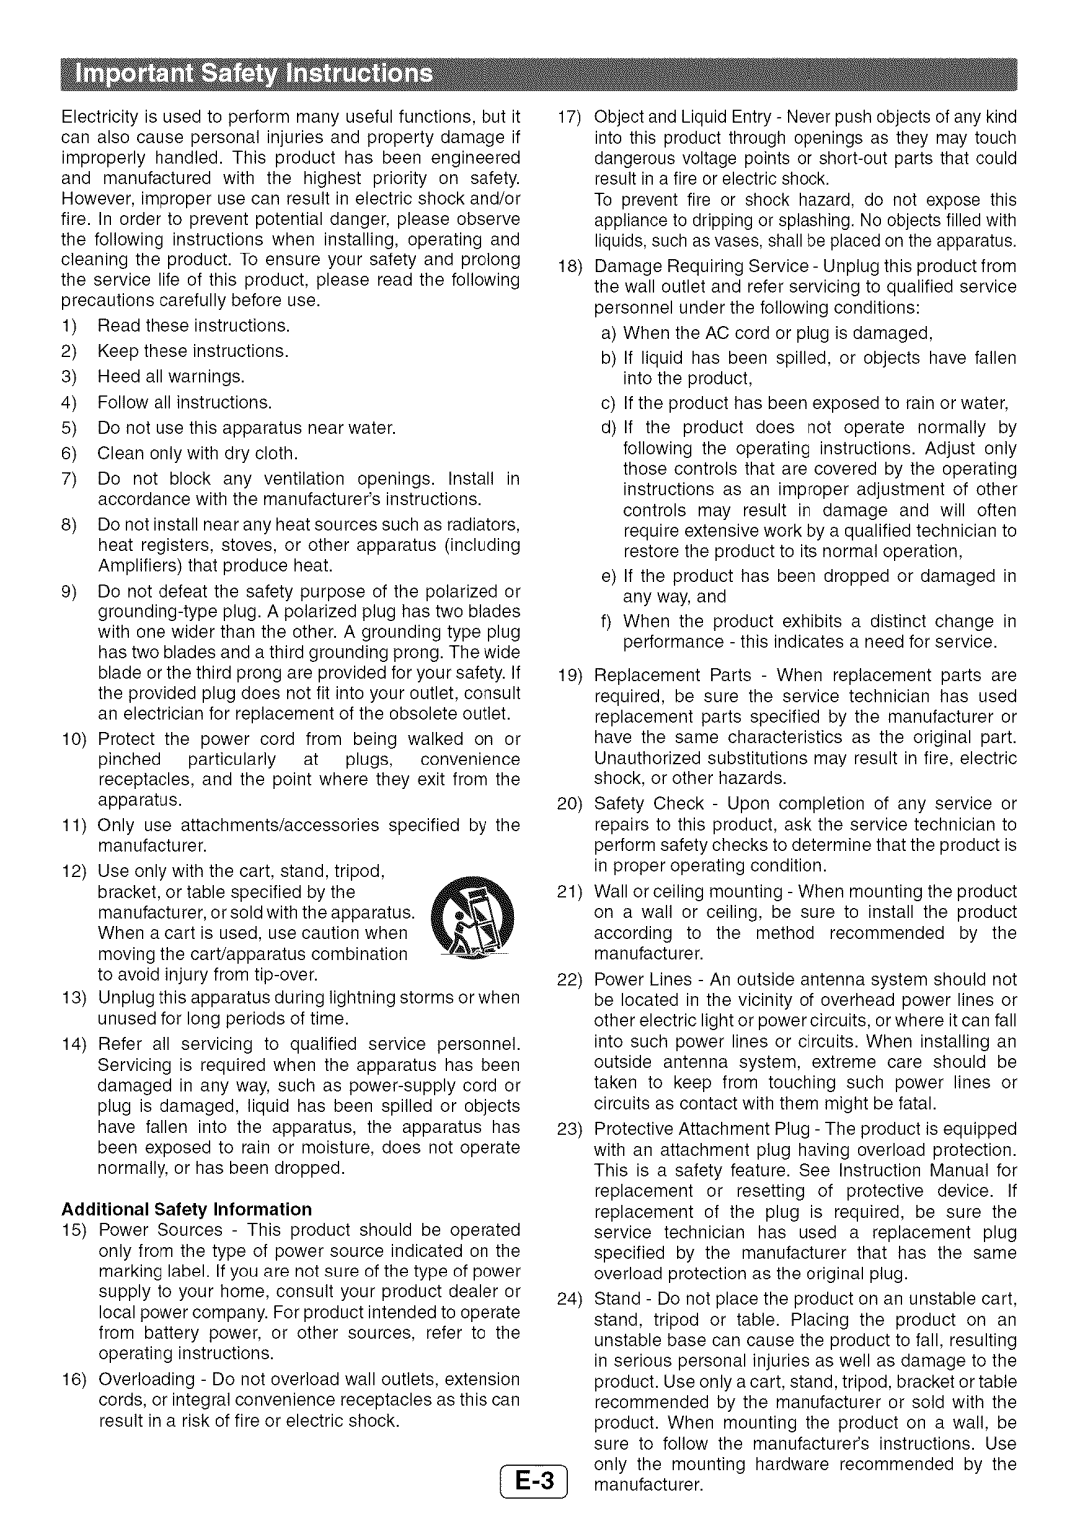 Sharp HT-SL72 operation manual Additional Safety Information 